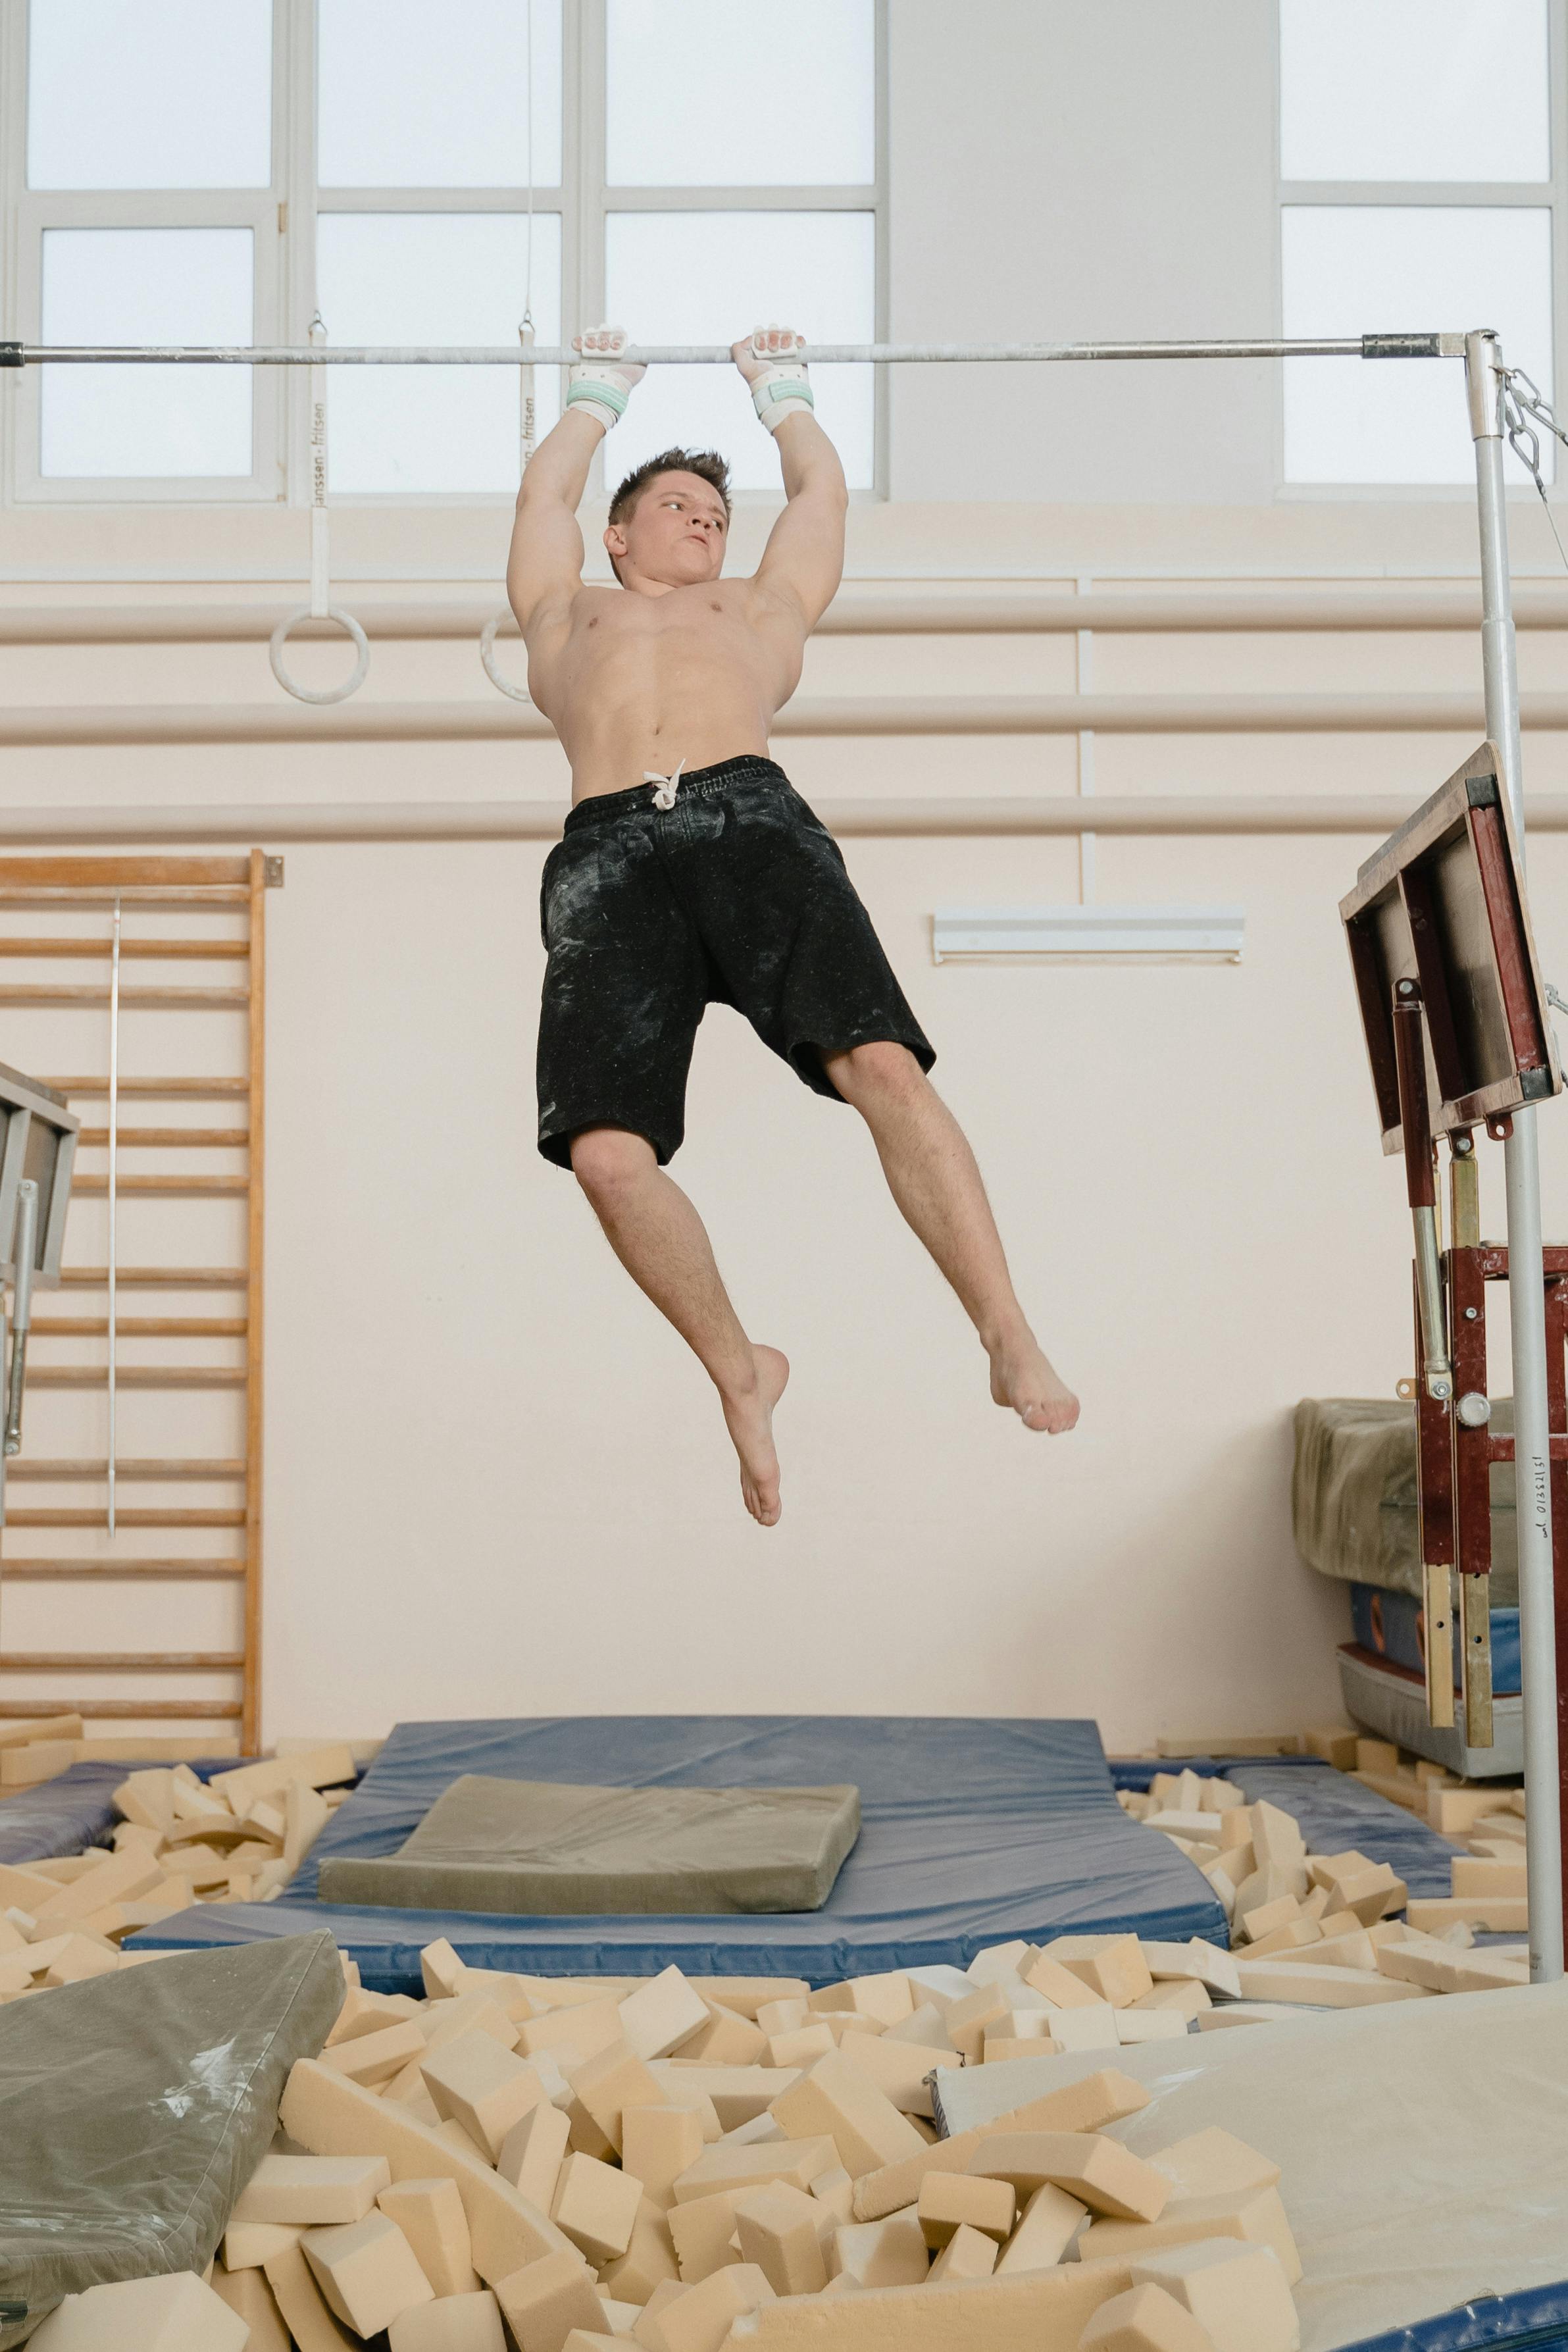 A Muscular Man Exercising · Free Stock Photo